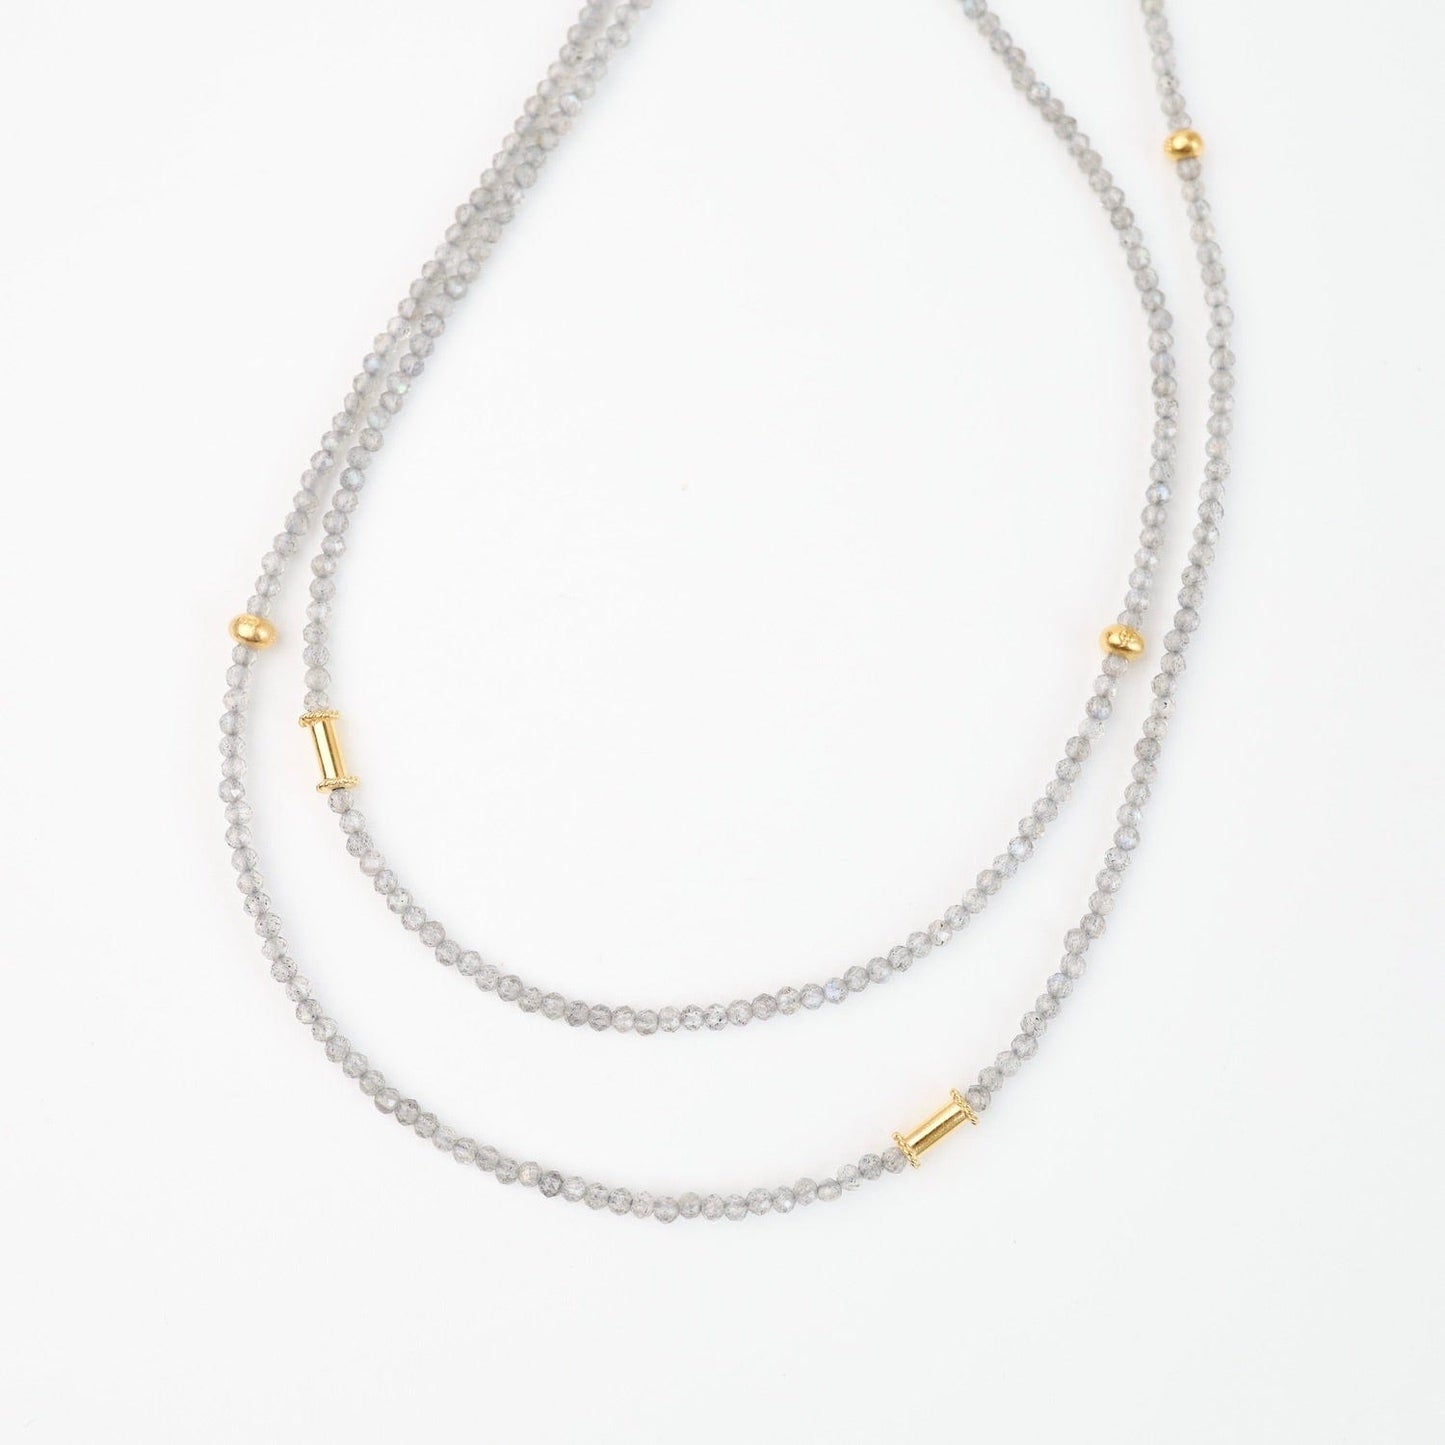 NKL-GF Labradorite and Gold Vermeil Necklace